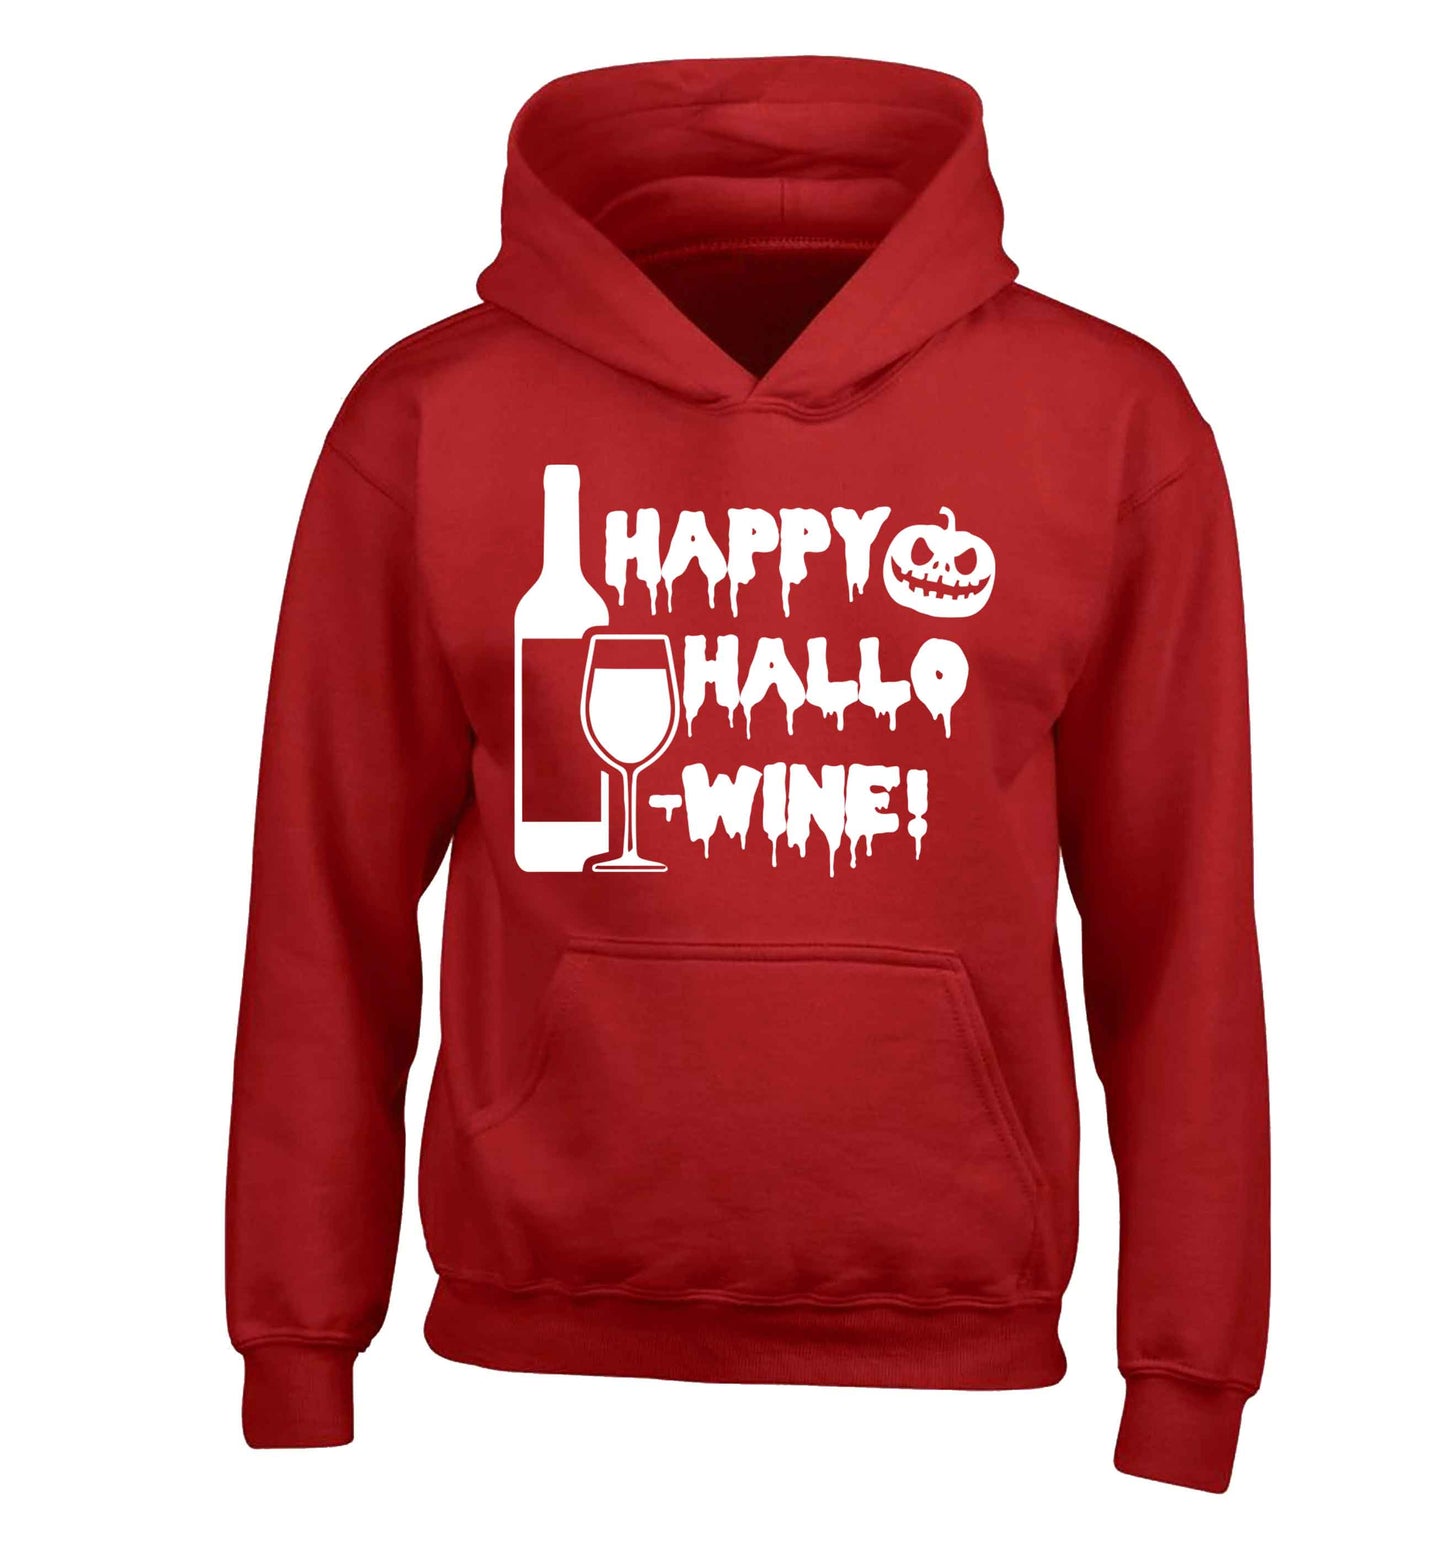 Happy hallow-wine children's red hoodie 12-13 Years